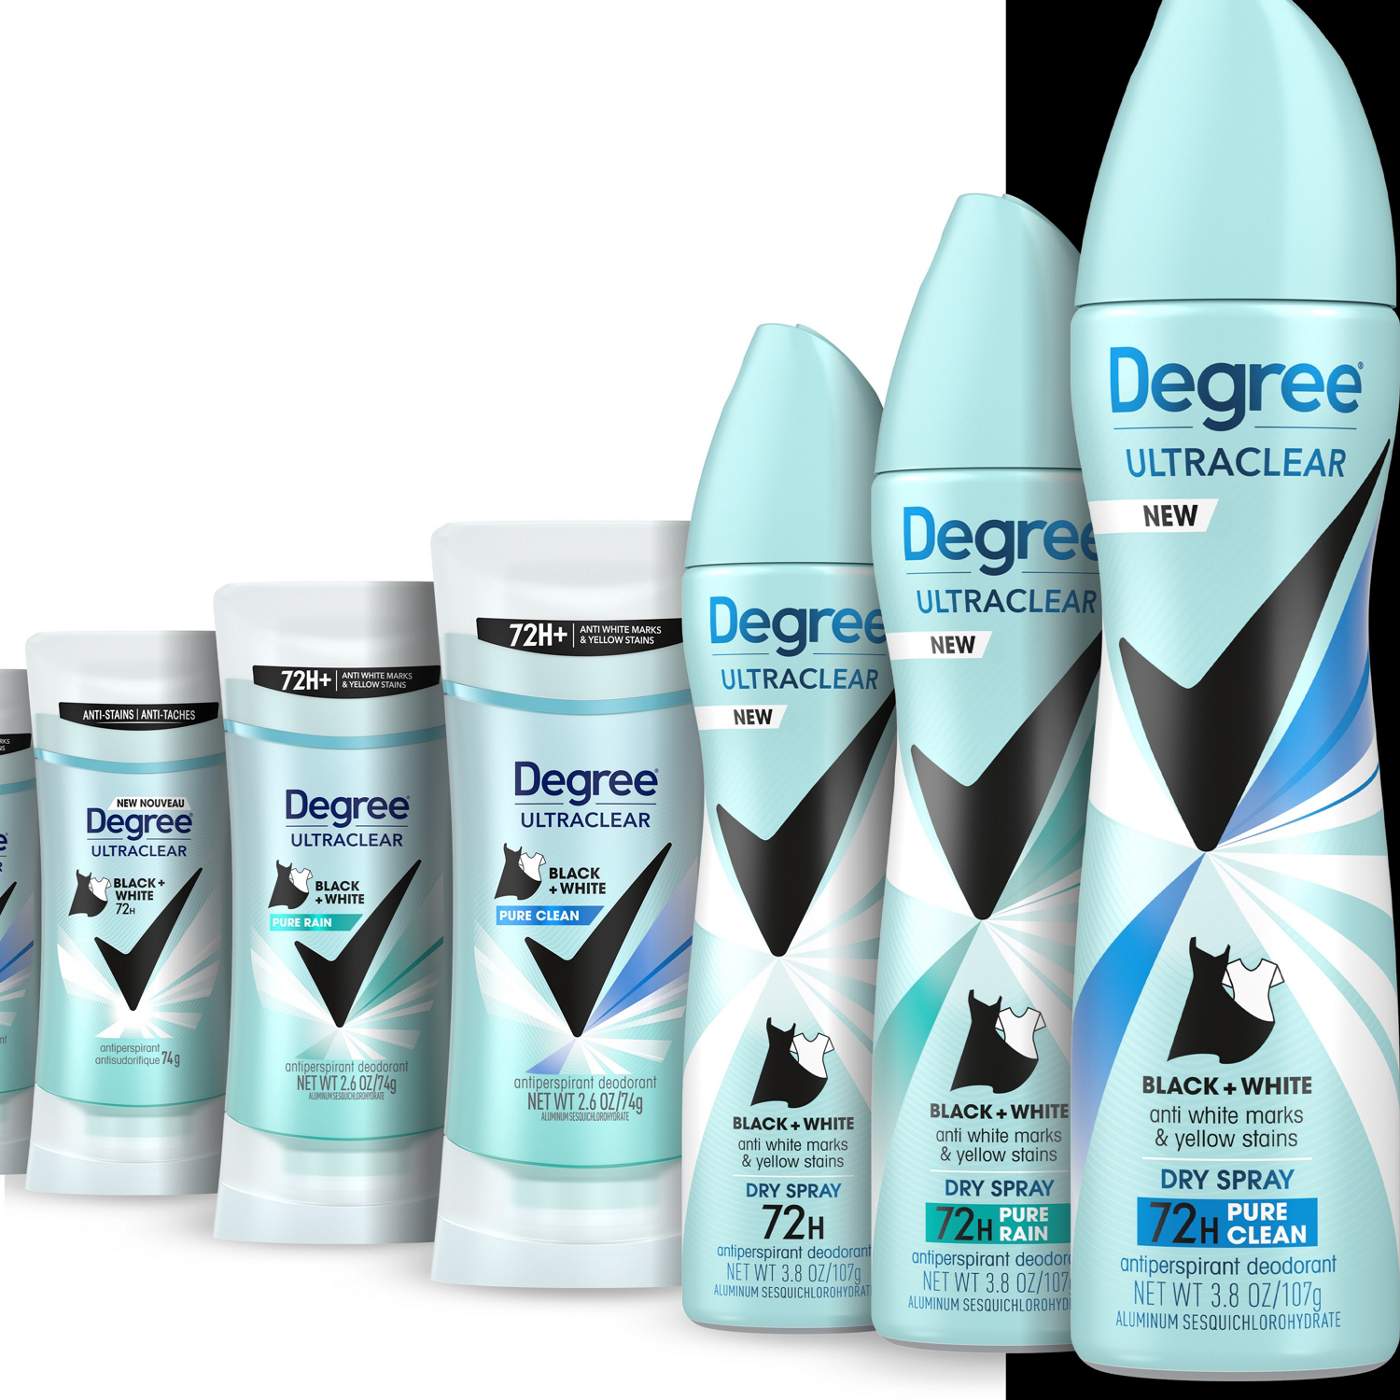 Degree UltraClear Antiperspirant Deodorant - Black+White; image 5 of 7